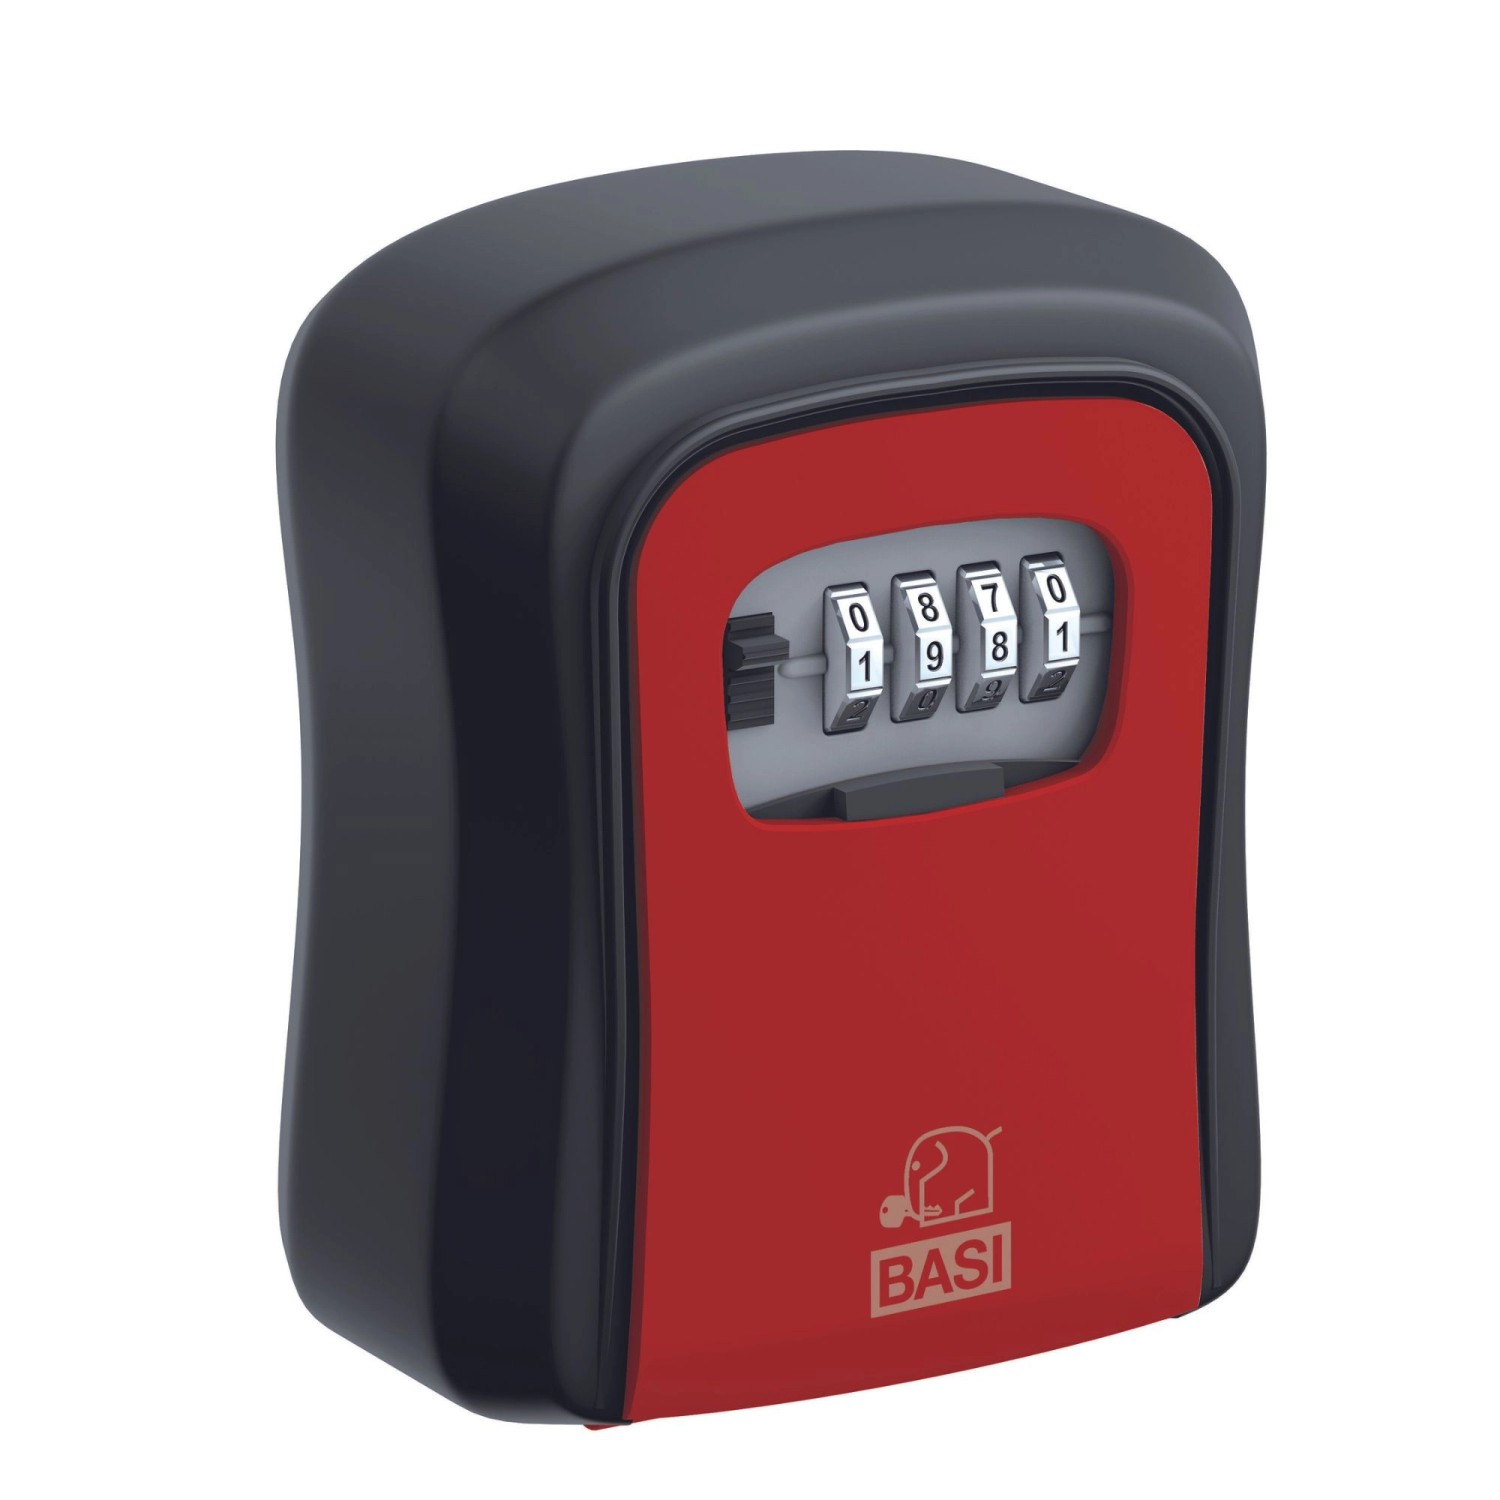 Basi - Schlüsselsafe - Schwarz-Rot - SSZ 200 - mit Zahlenschloss - Aluminium - 2101-0000-1114